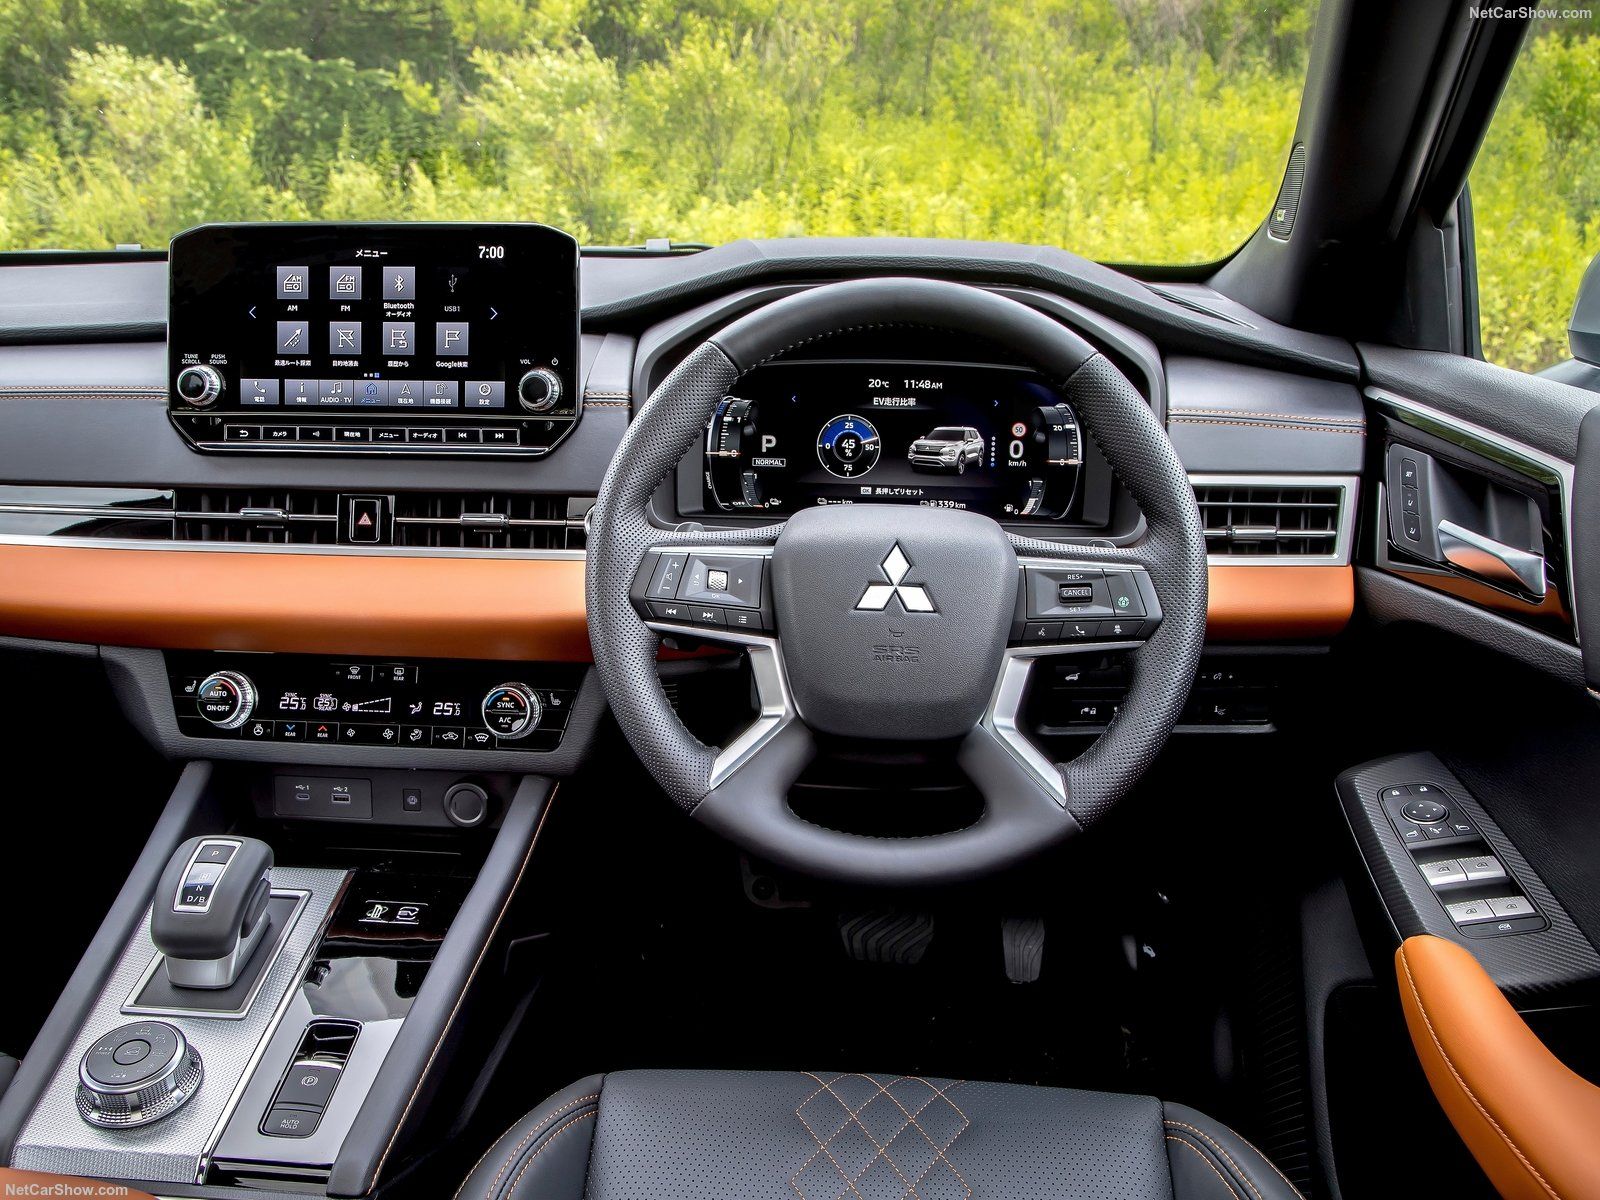 2023 Mitsubishi Outlander PHEV cabin, tan and black